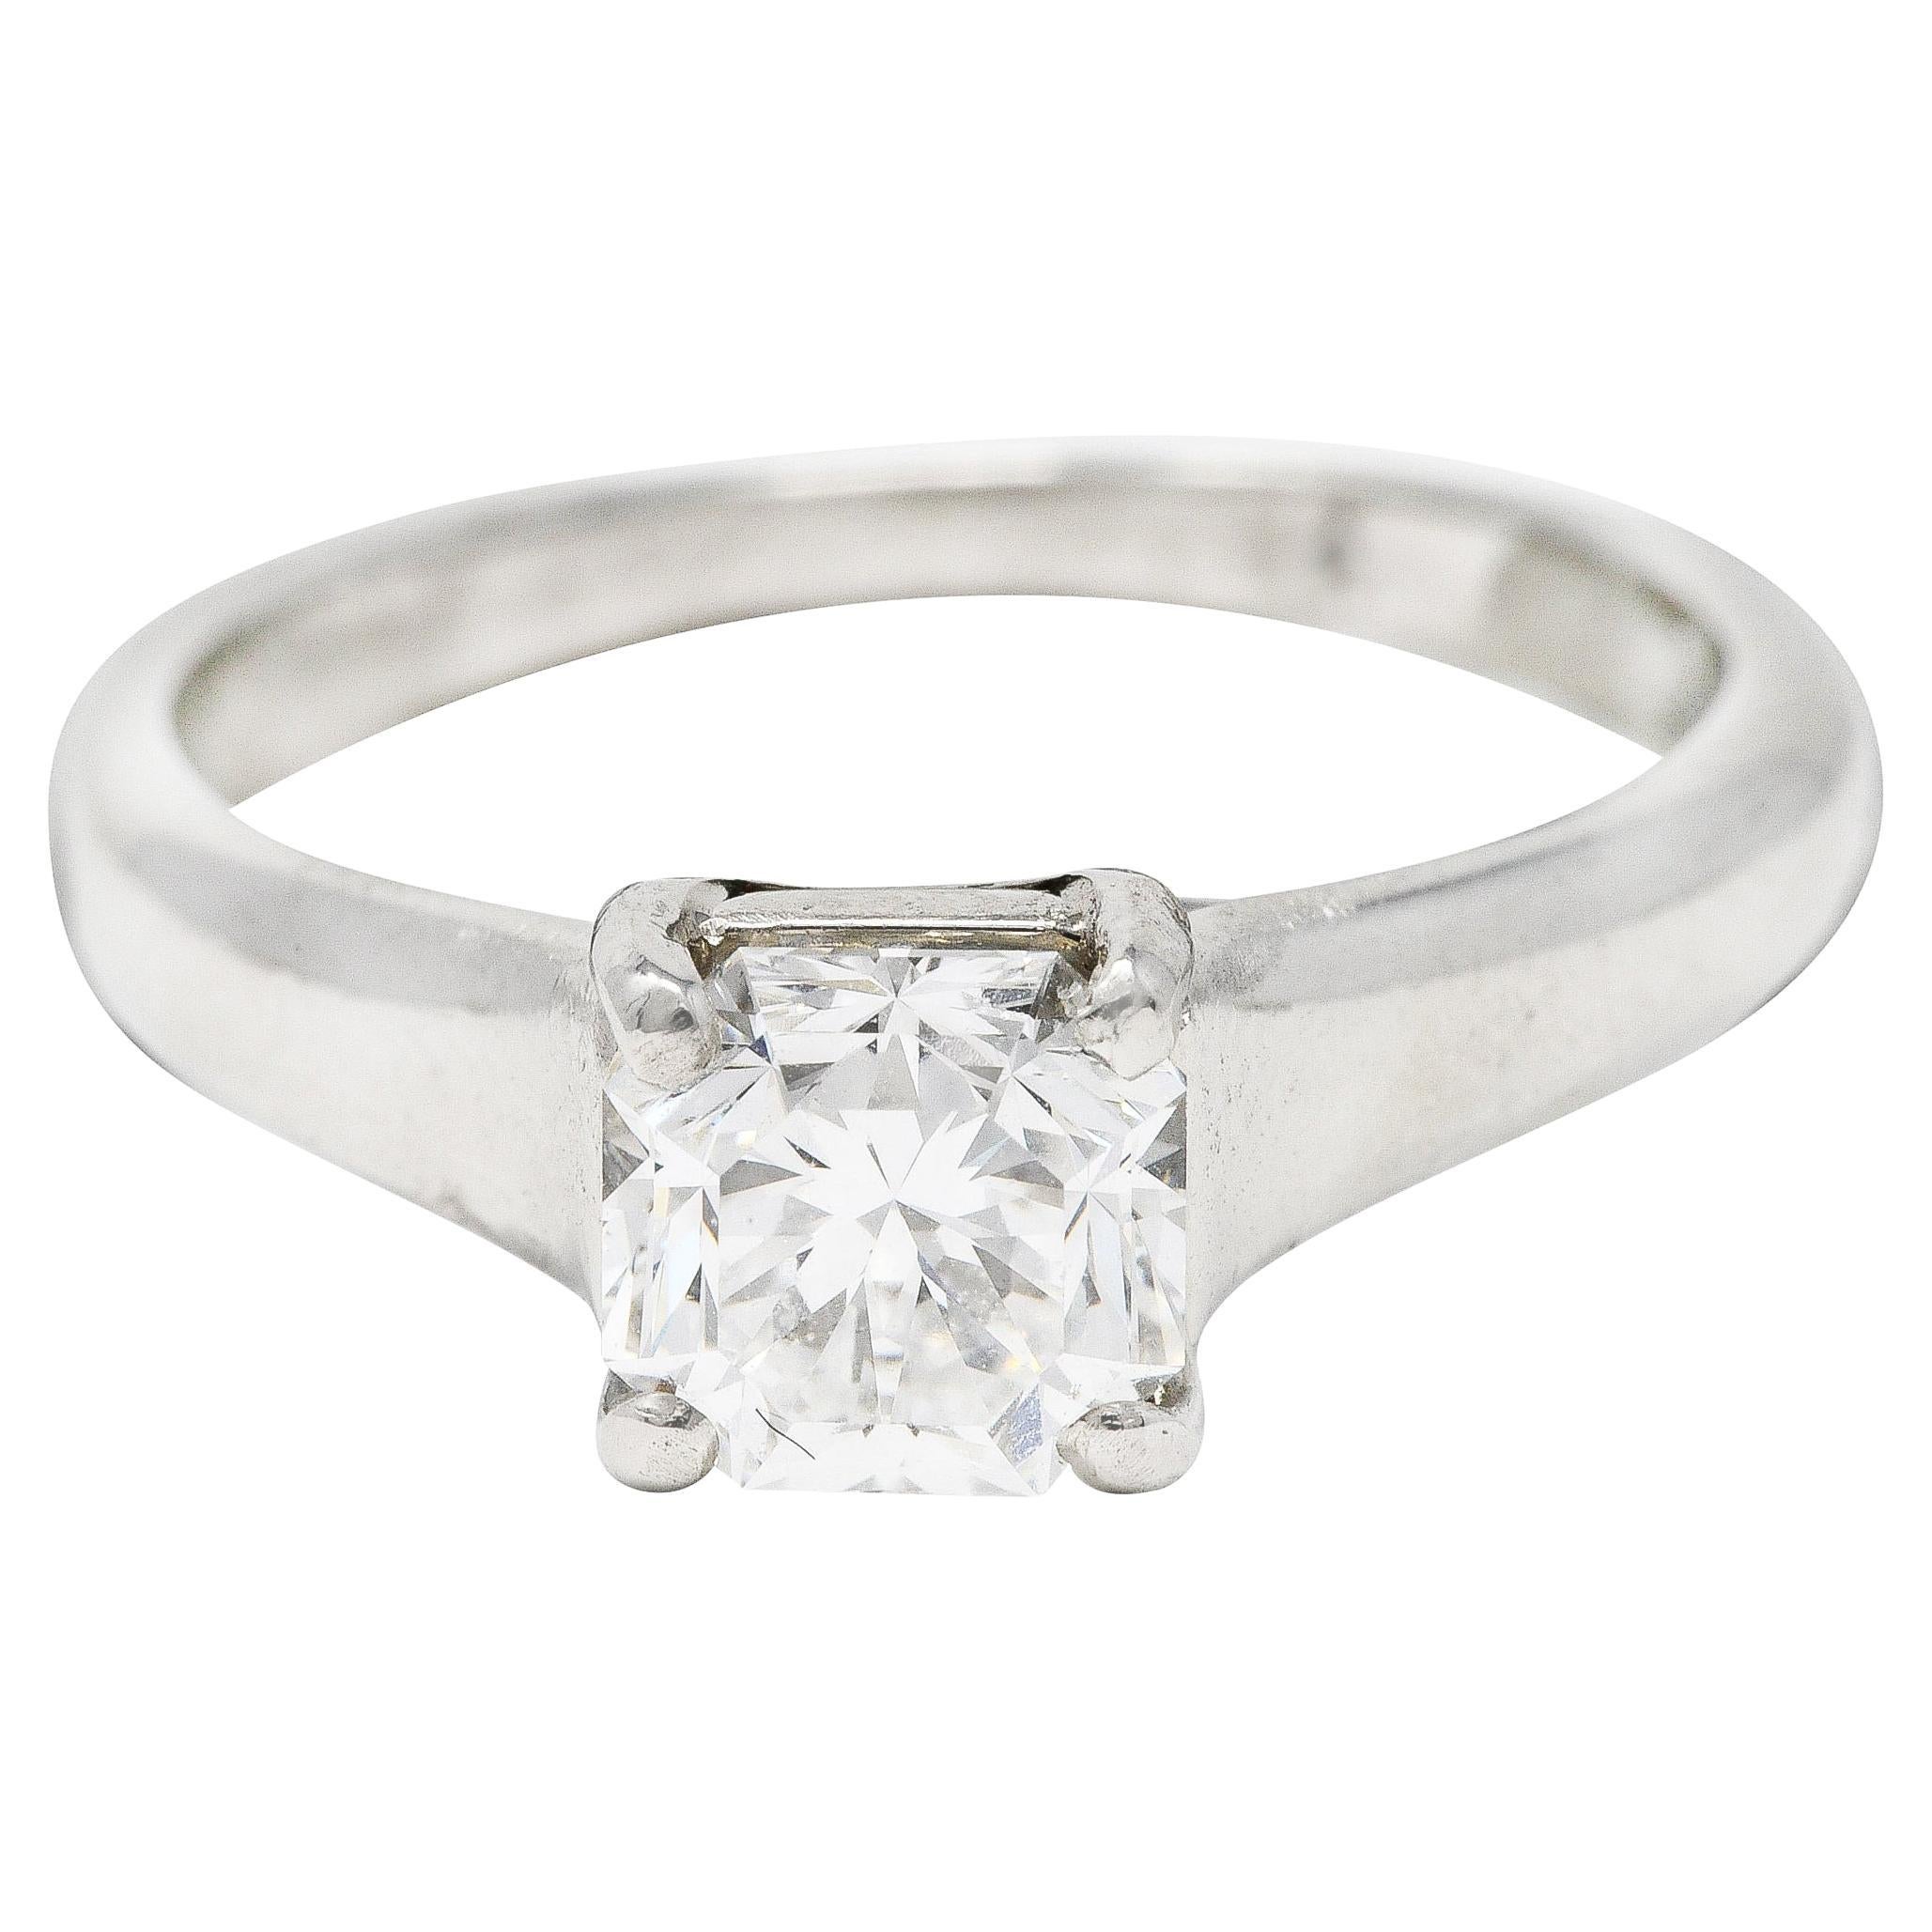 Tiffany & Co. 1.03 Carats Lucida Diamond Platinum Solitaire Engagement Ring GIA